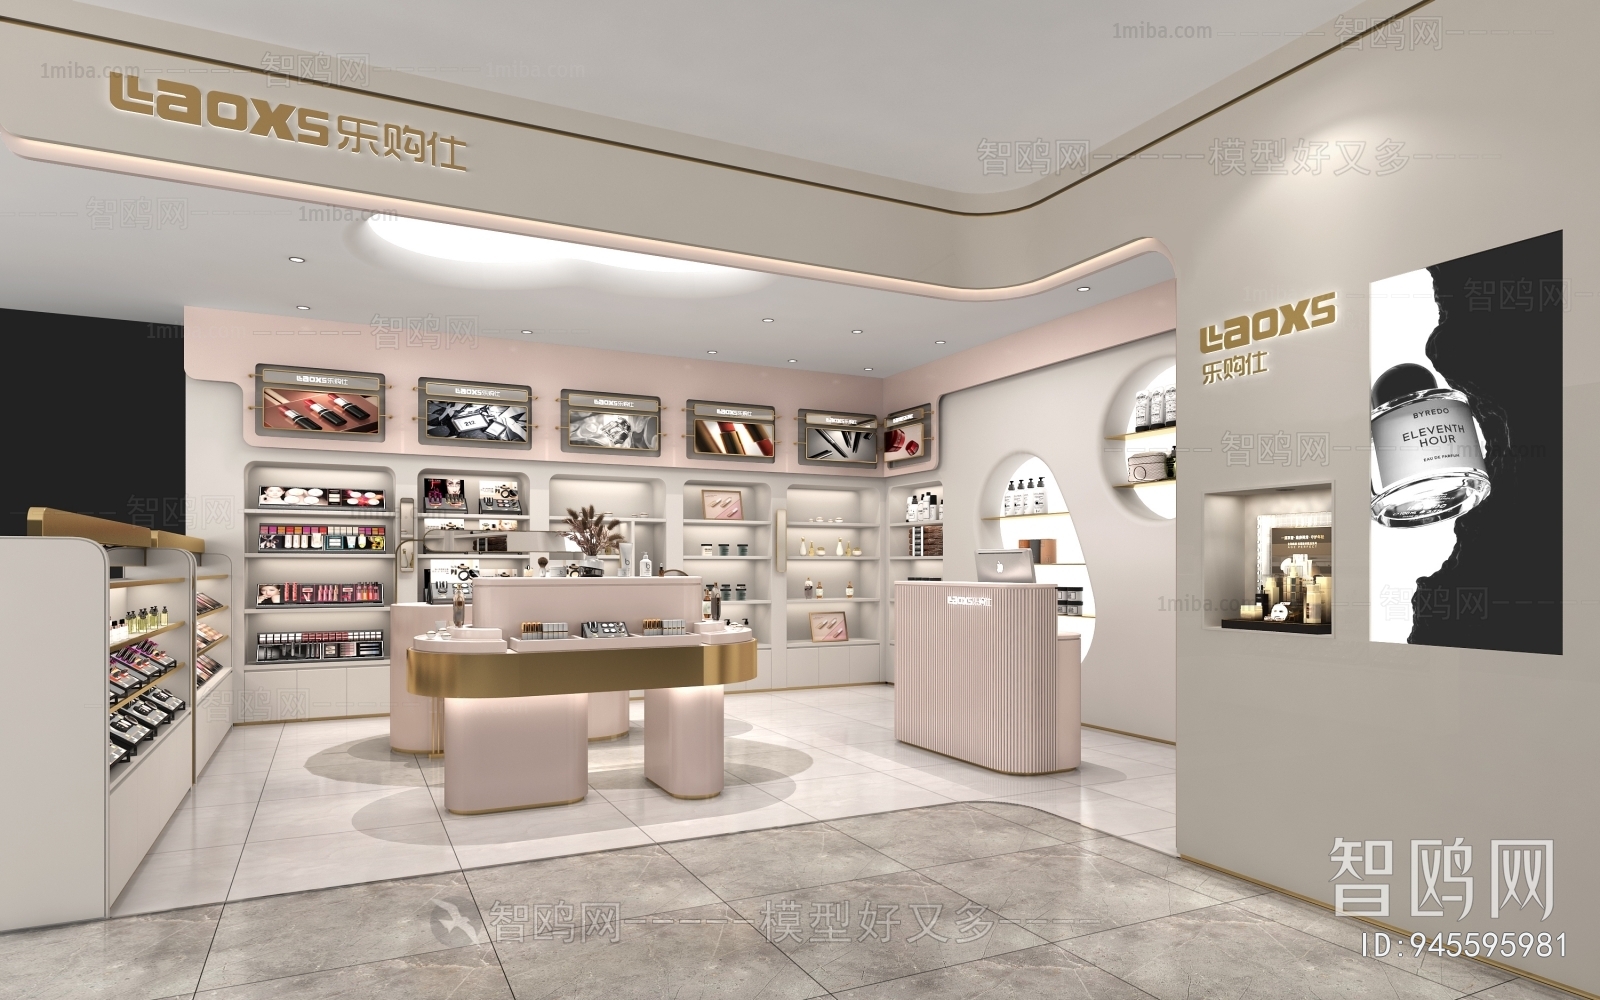 Modern Cosmetic Shop